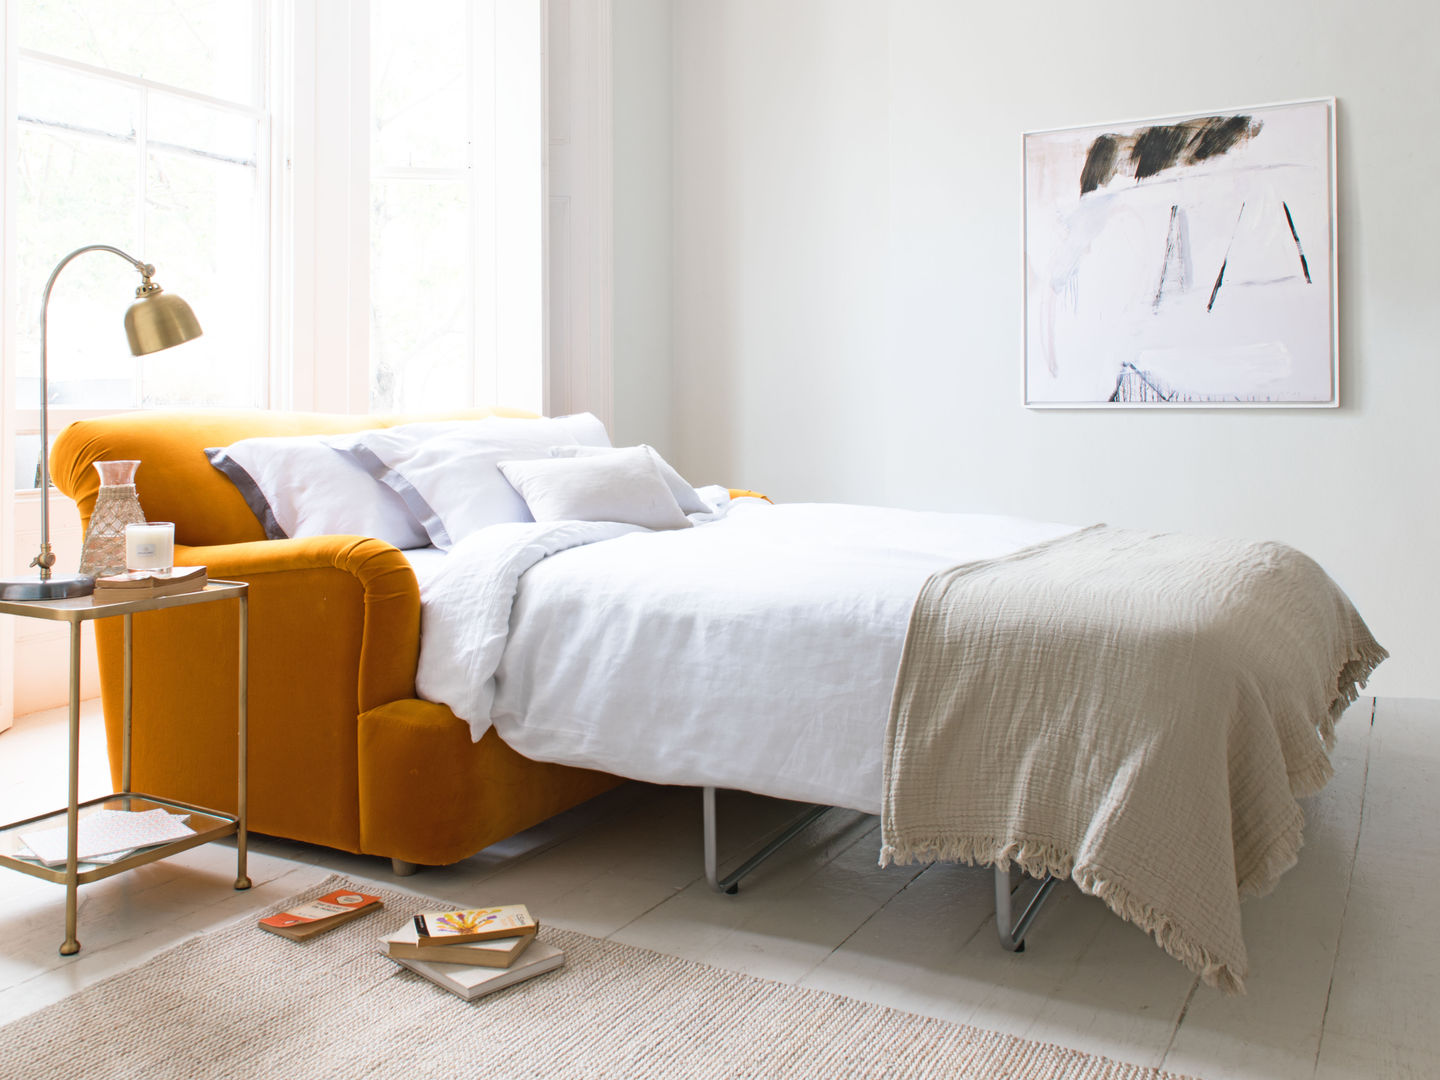 Pudding sofa bed Loaf 모던스타일 거실 sofa bed,sofa,bed,new,orange,guest-bed